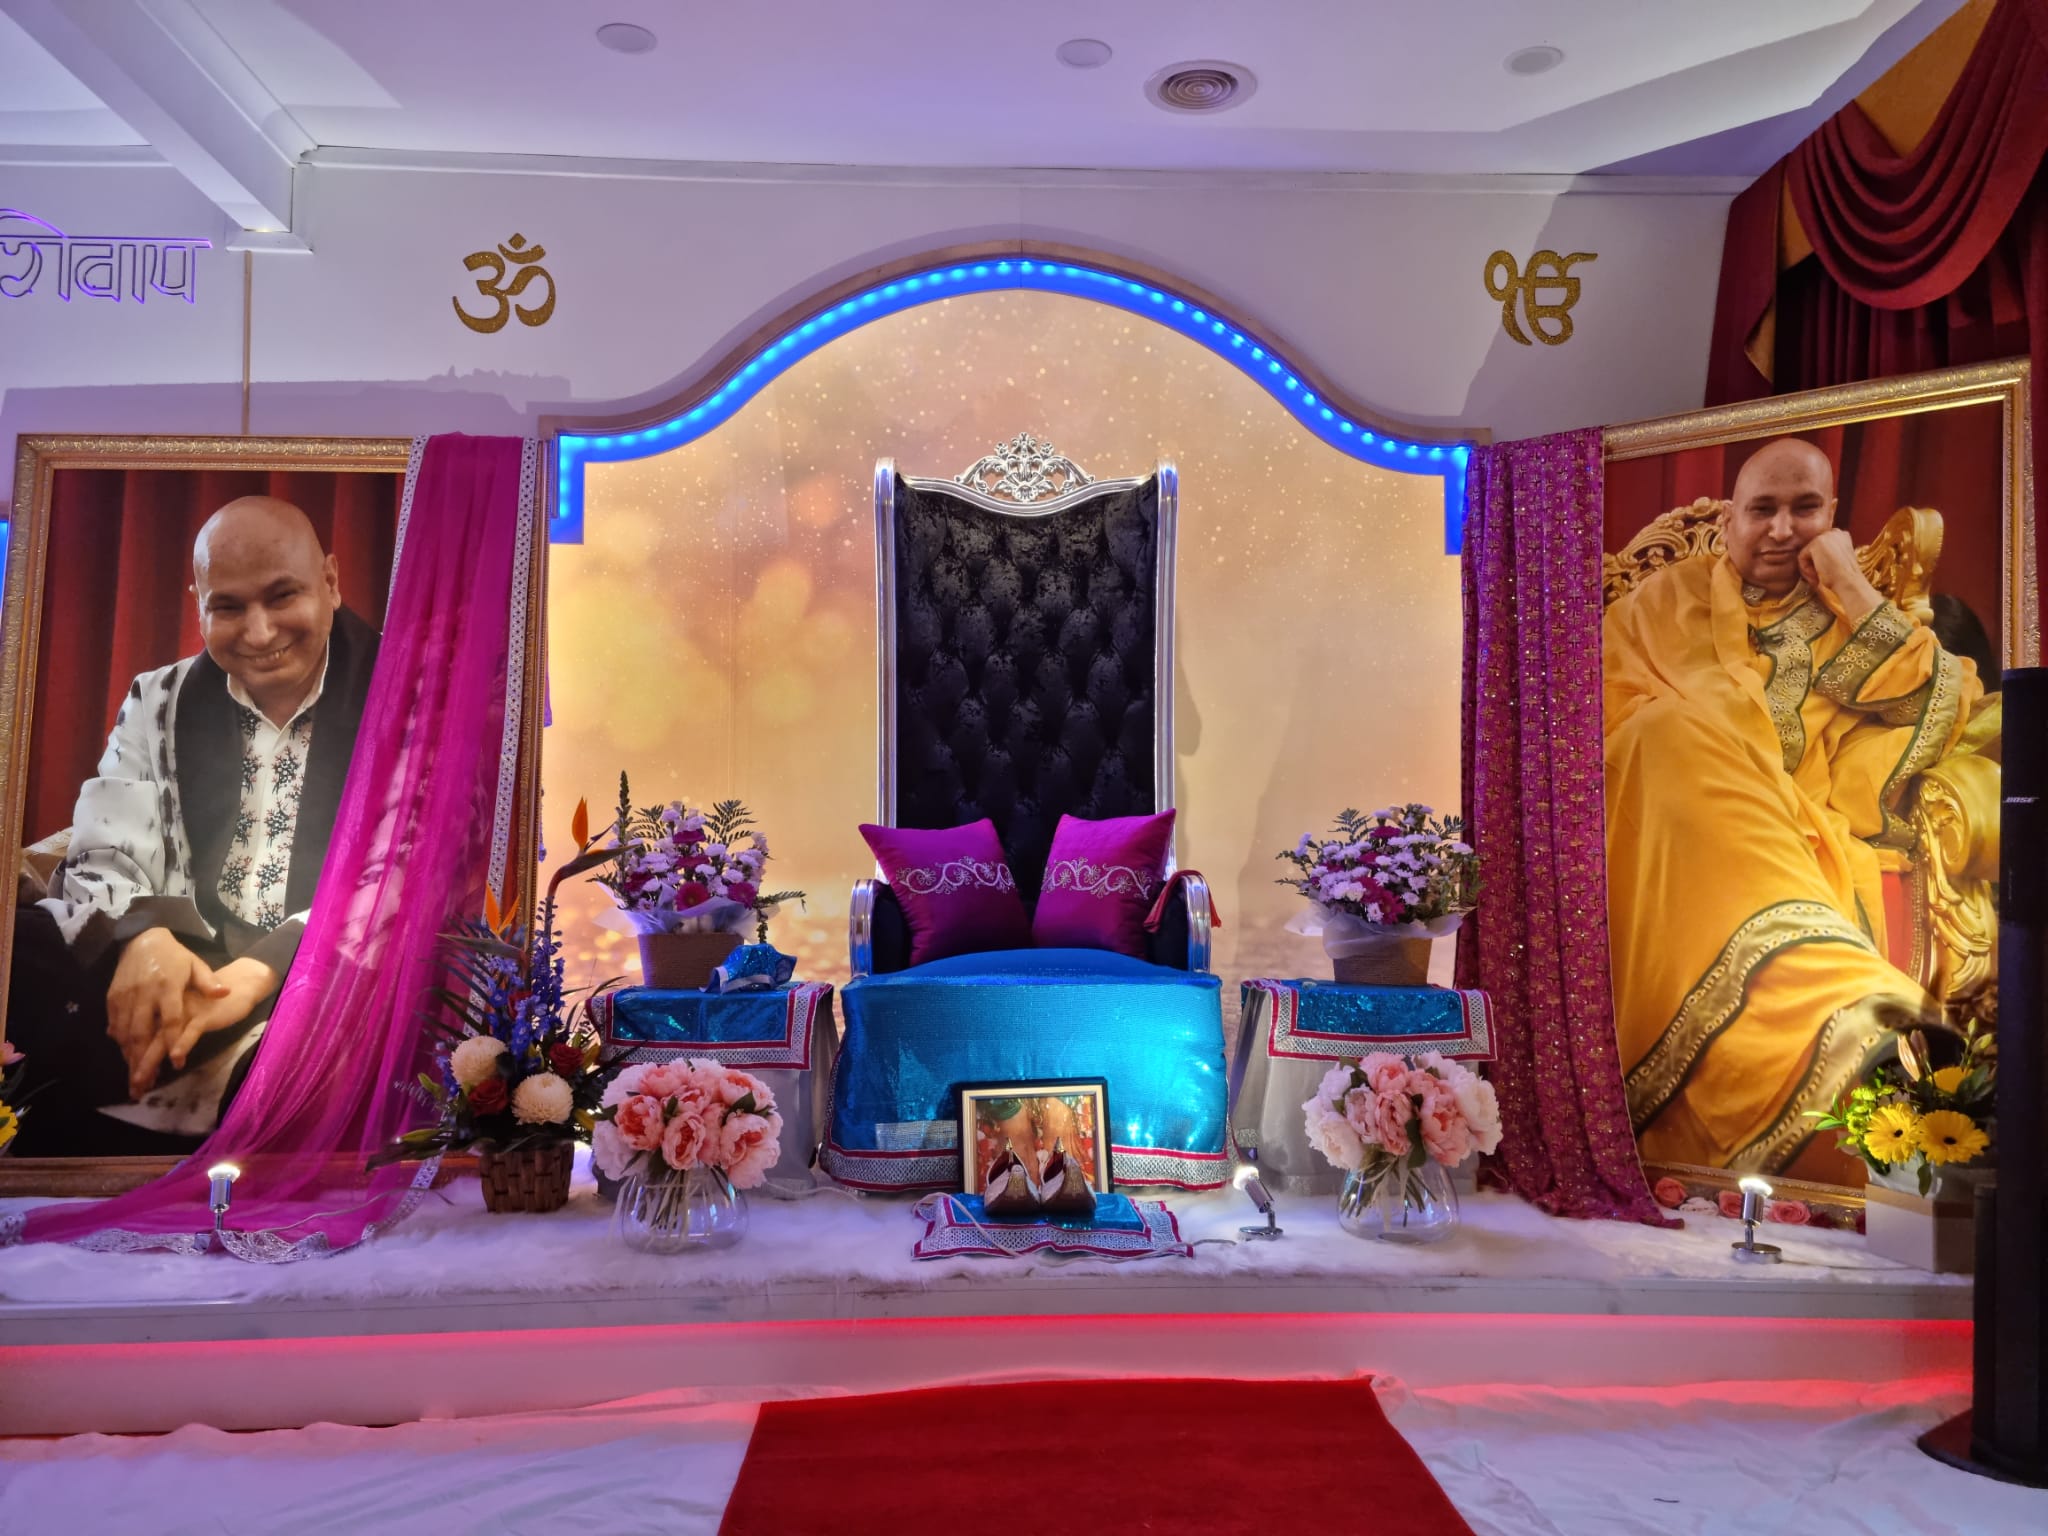 Happy Birthday Guruji Decoration At Home | 7eventzz